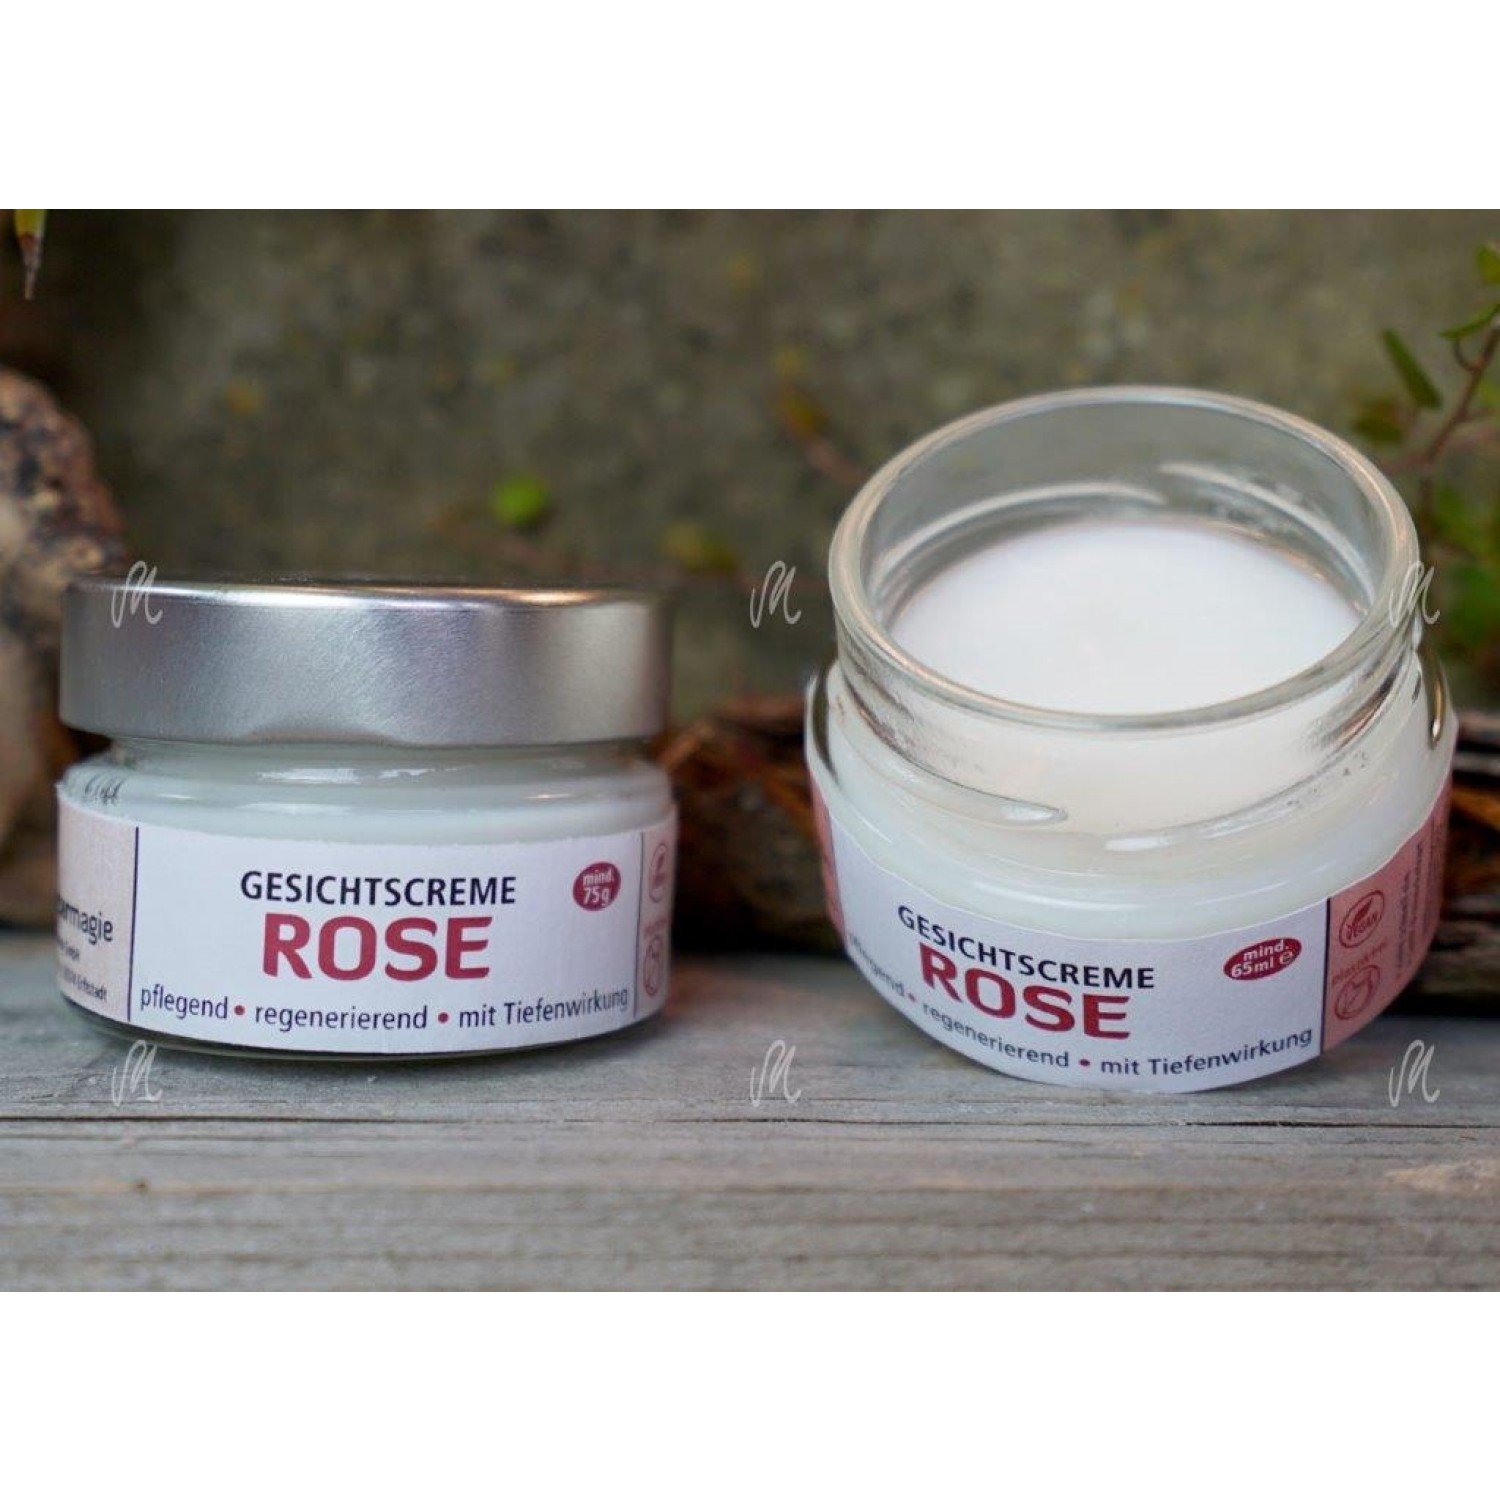 Rose Face Cream in Jar - natural cosmetics | Kraeutermagie